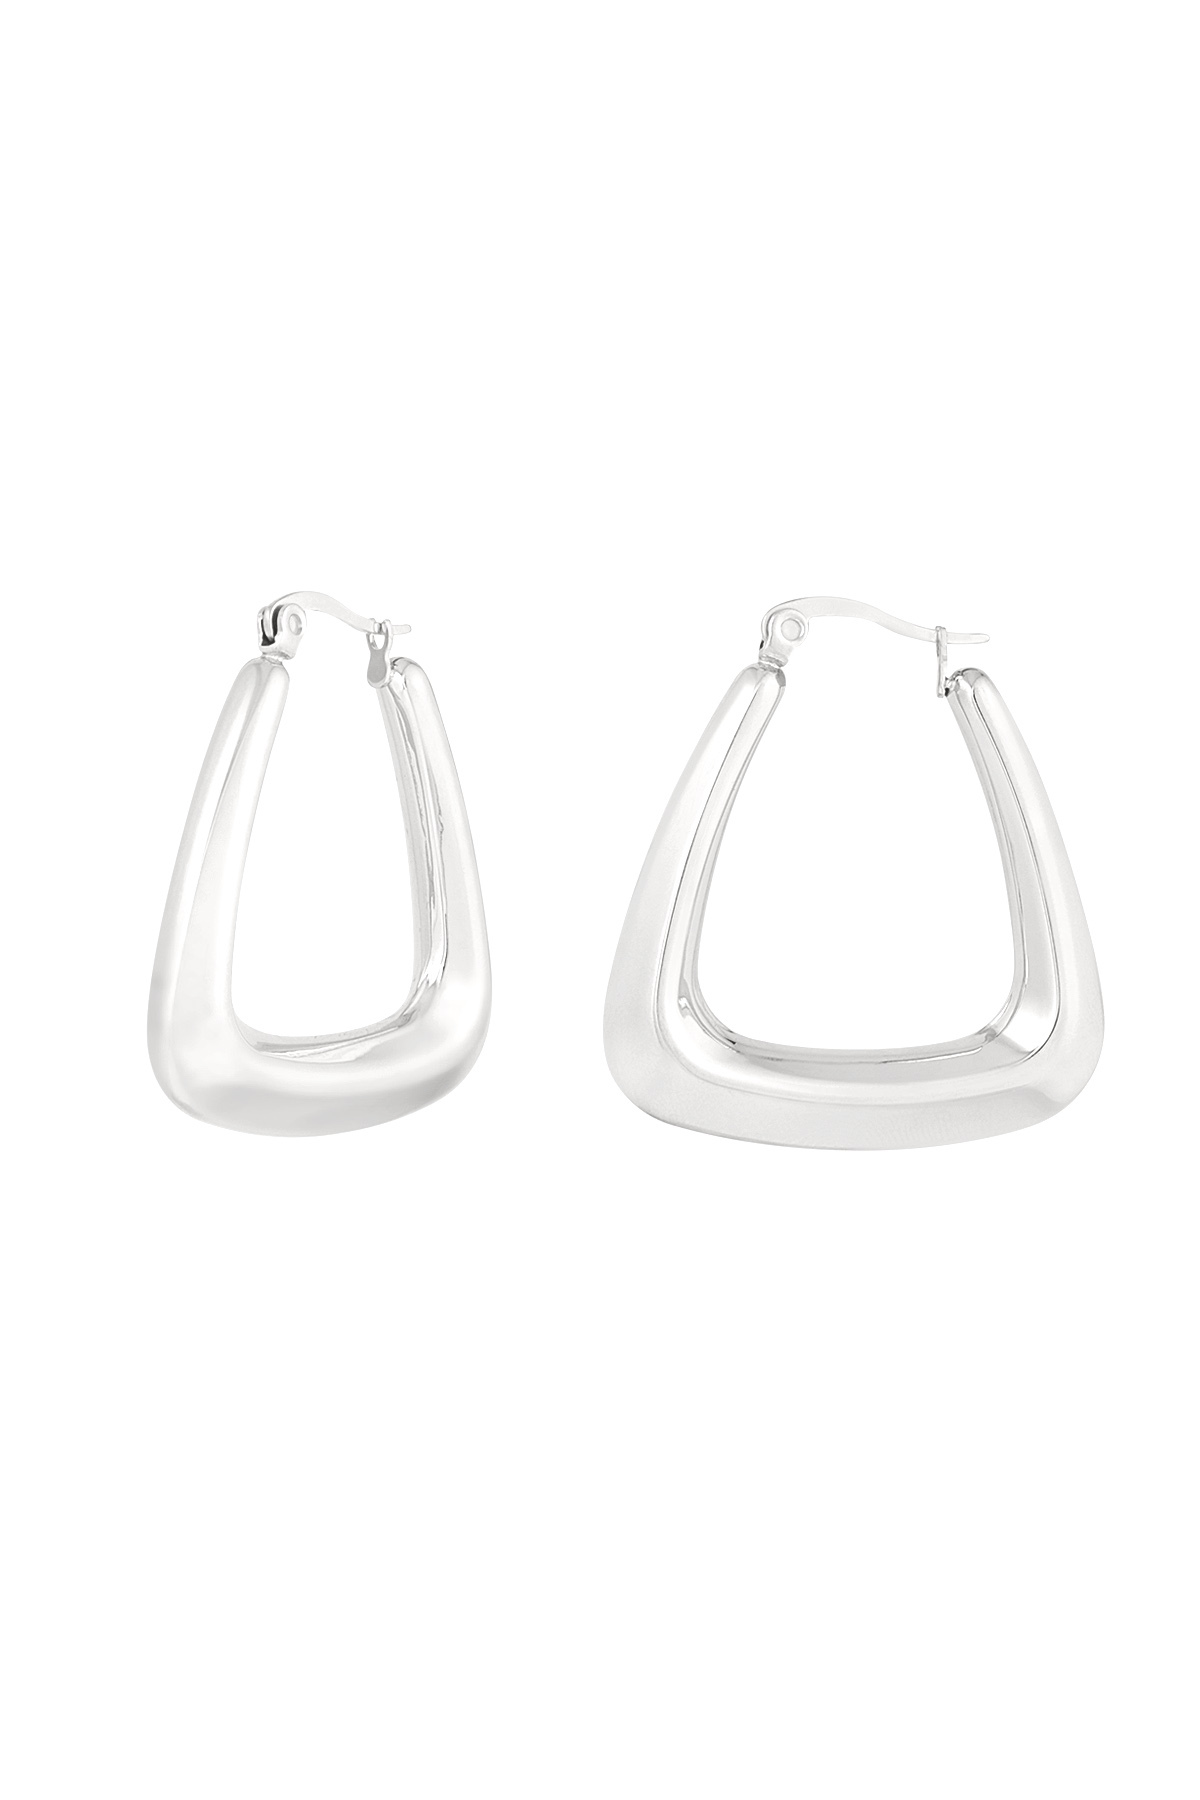 Simple statement earrings - silver